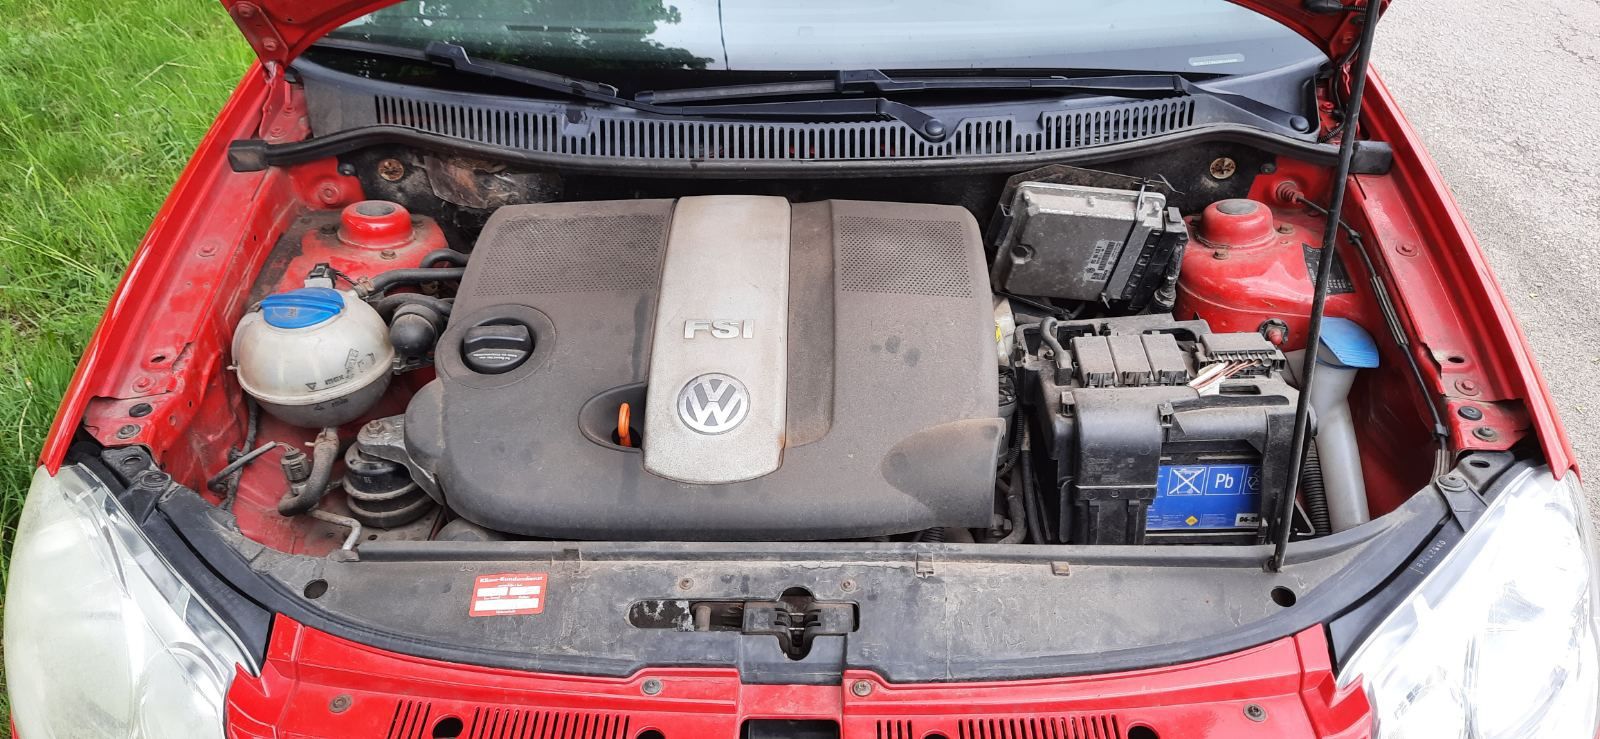 Volkswagen polo fsi 1.4 бензин 2006р.